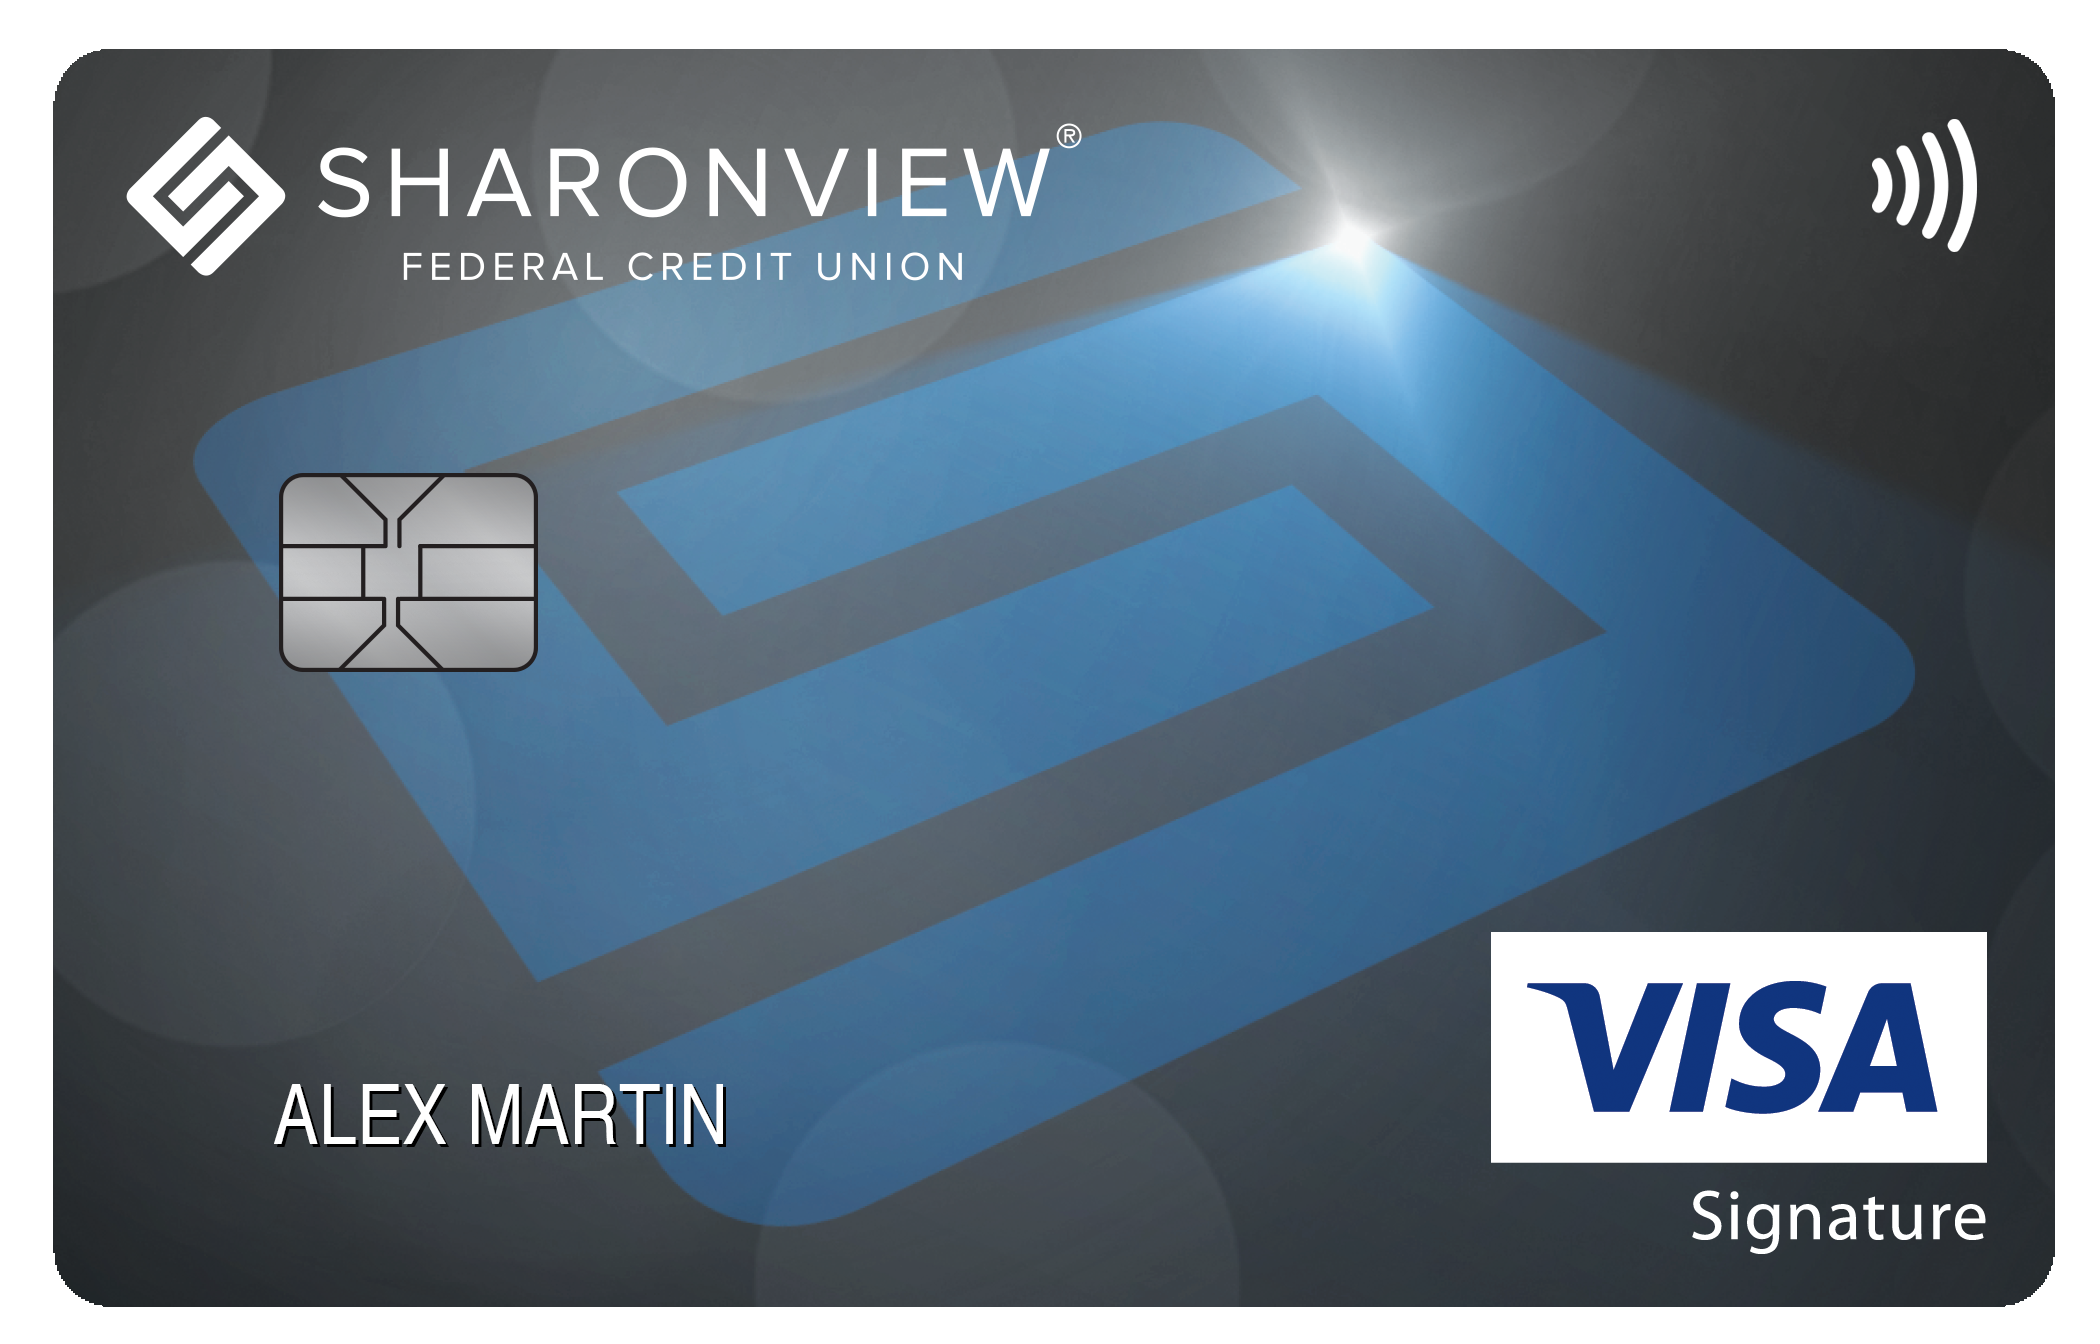 Sharonview Federal Credit Union Travel Rewards+ Card